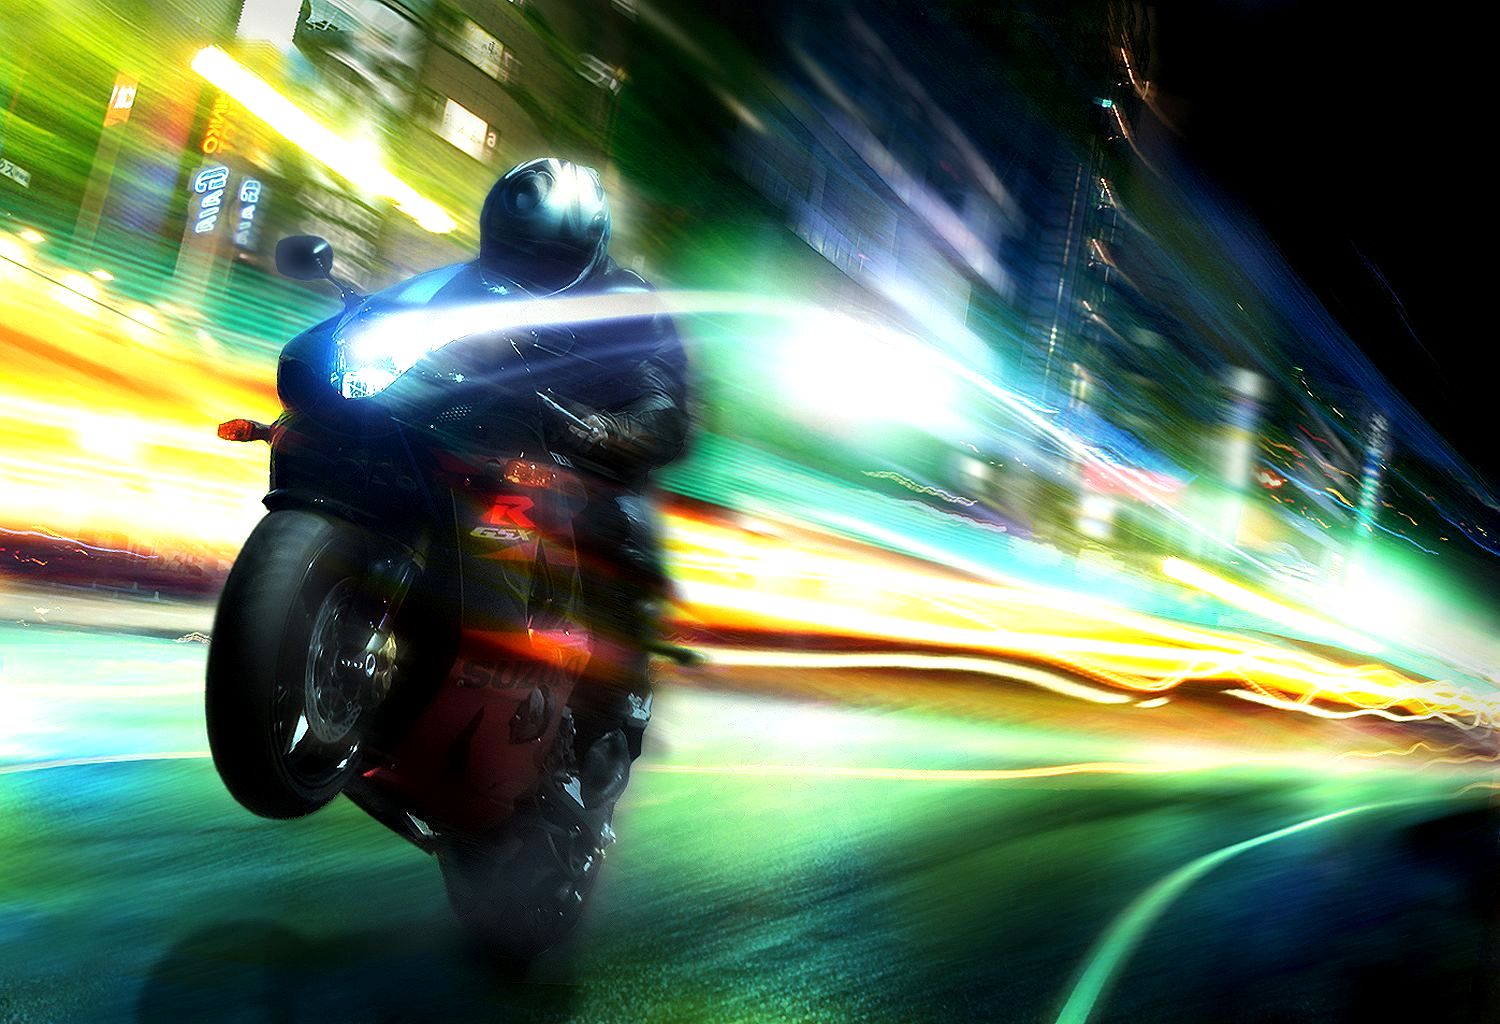 Motorbike speeding